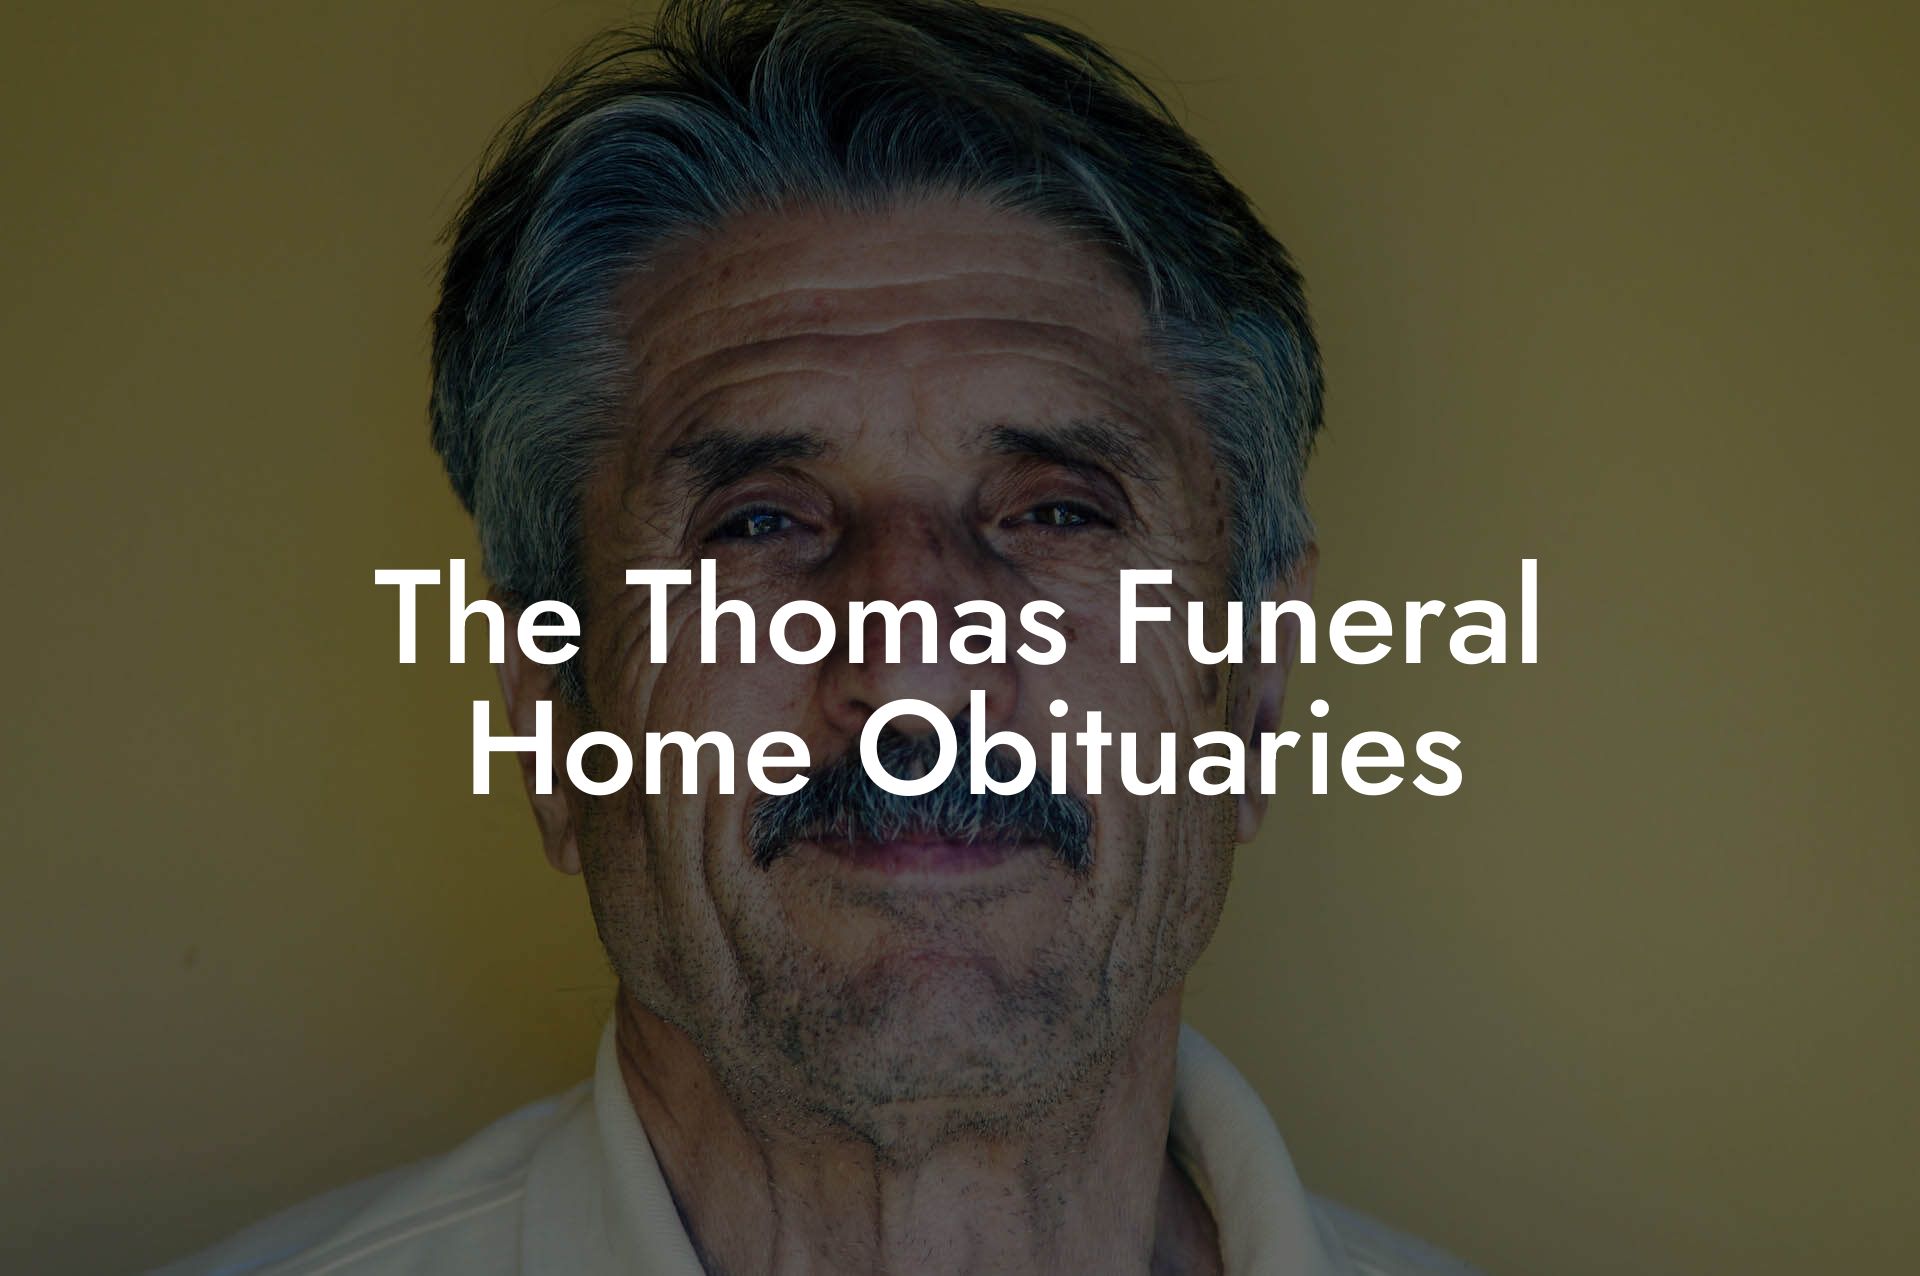 The Thomas Funeral Home Obituaries